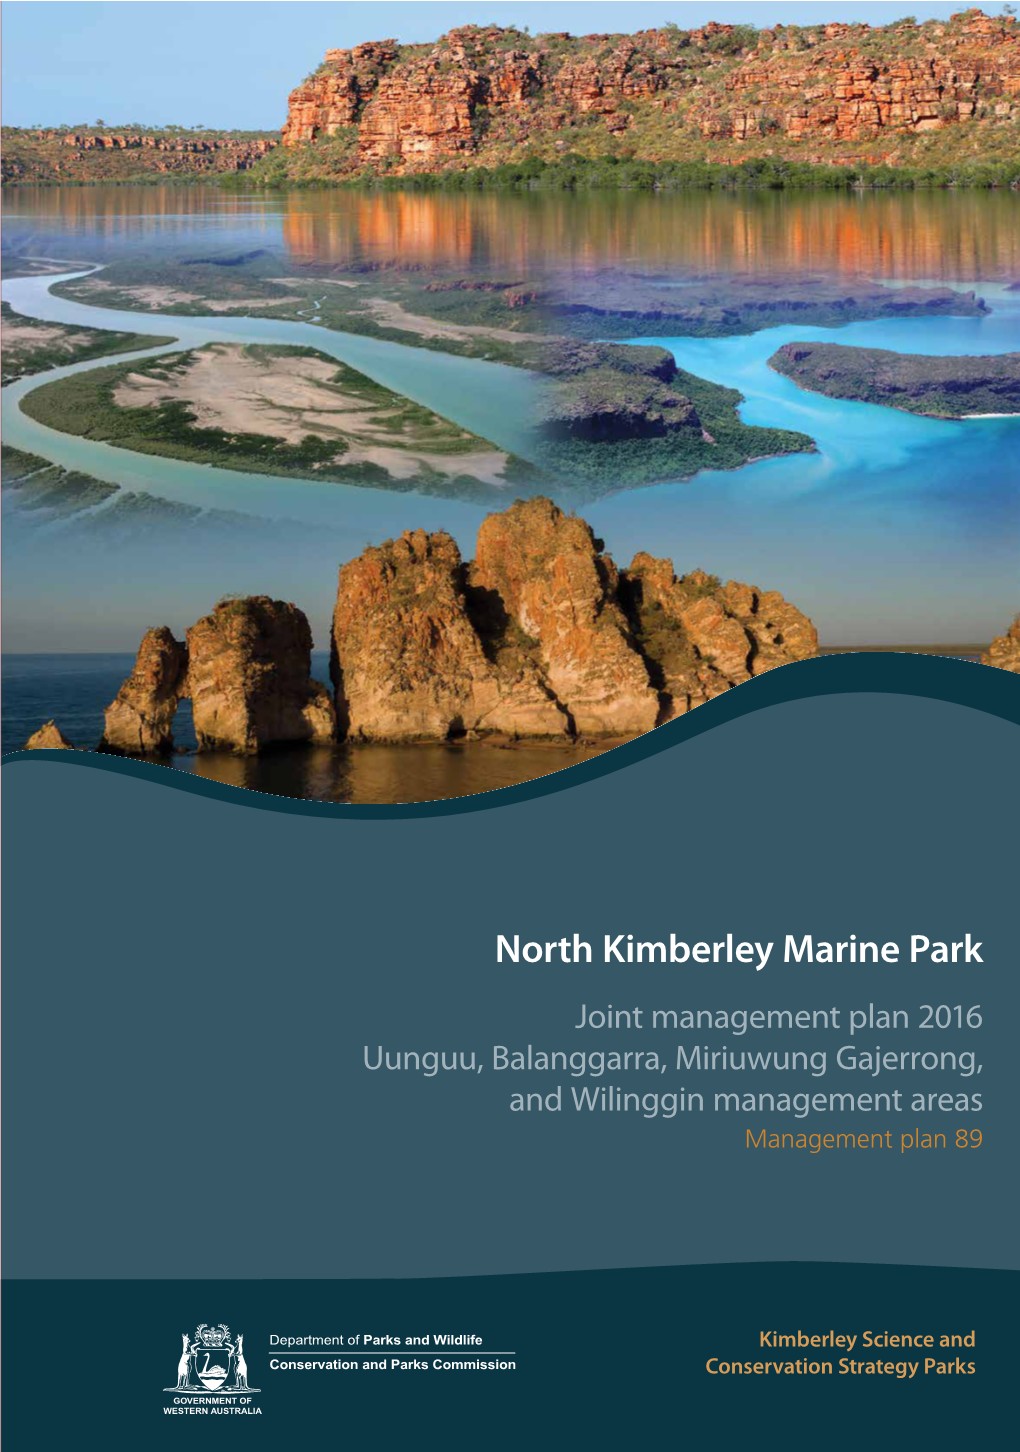 North Kimberley Marine Park Joint Management Plan 2016 Uunguu, Balanggarra, Miriuwung Gajerrong, and Wilinggin Management Areas Management Plan 89